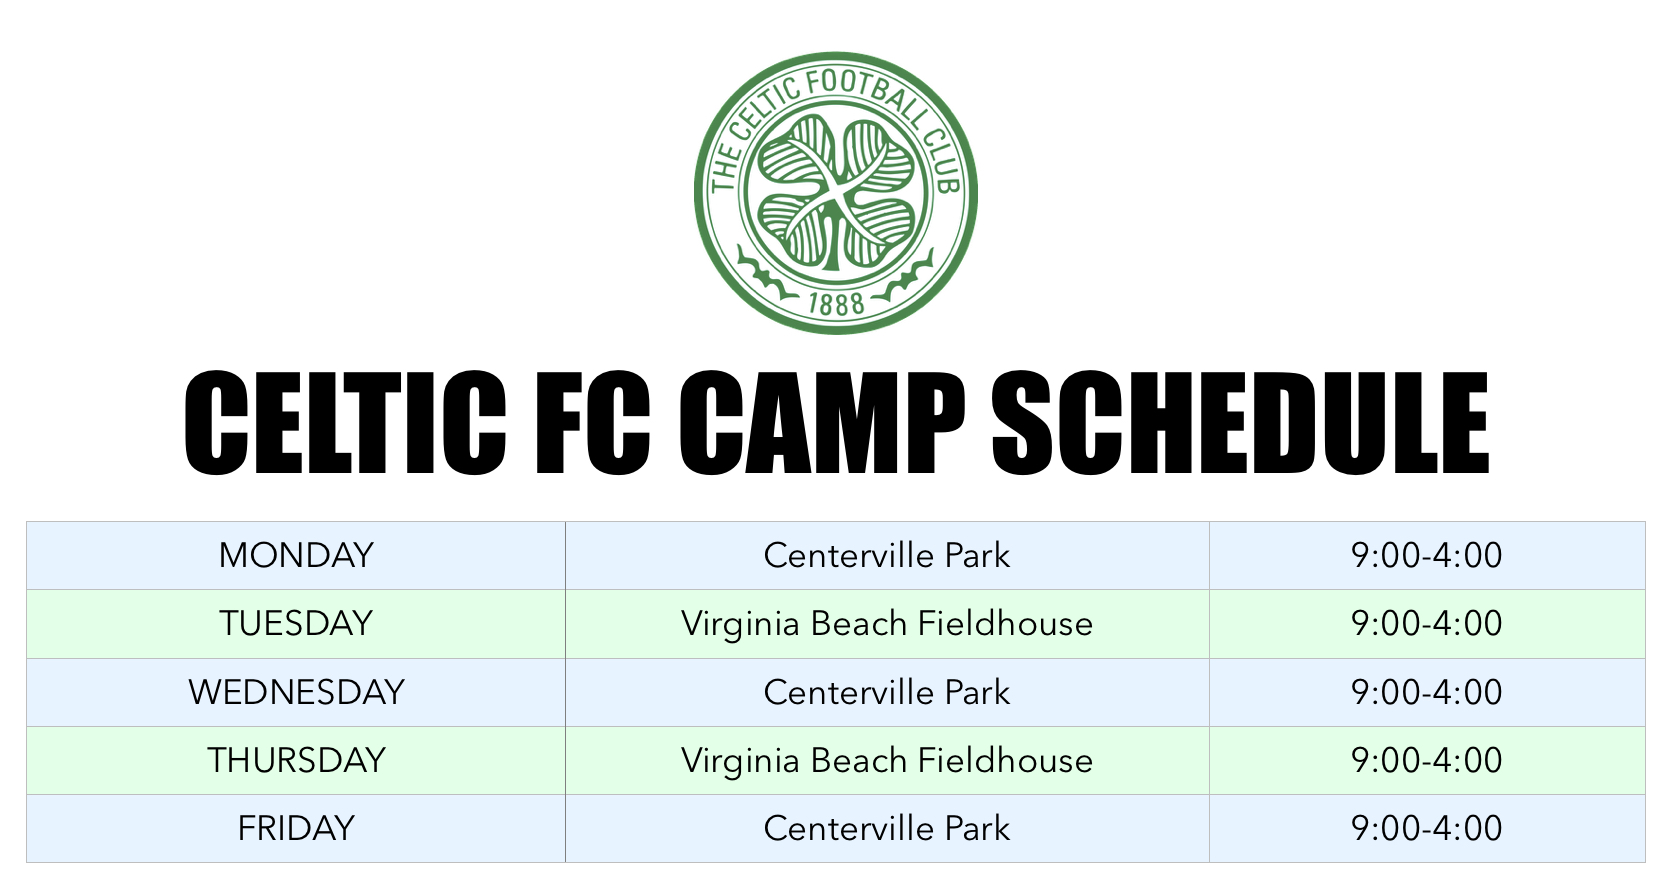 celtic schedule jpeg • Chesapeake United Soccer Club